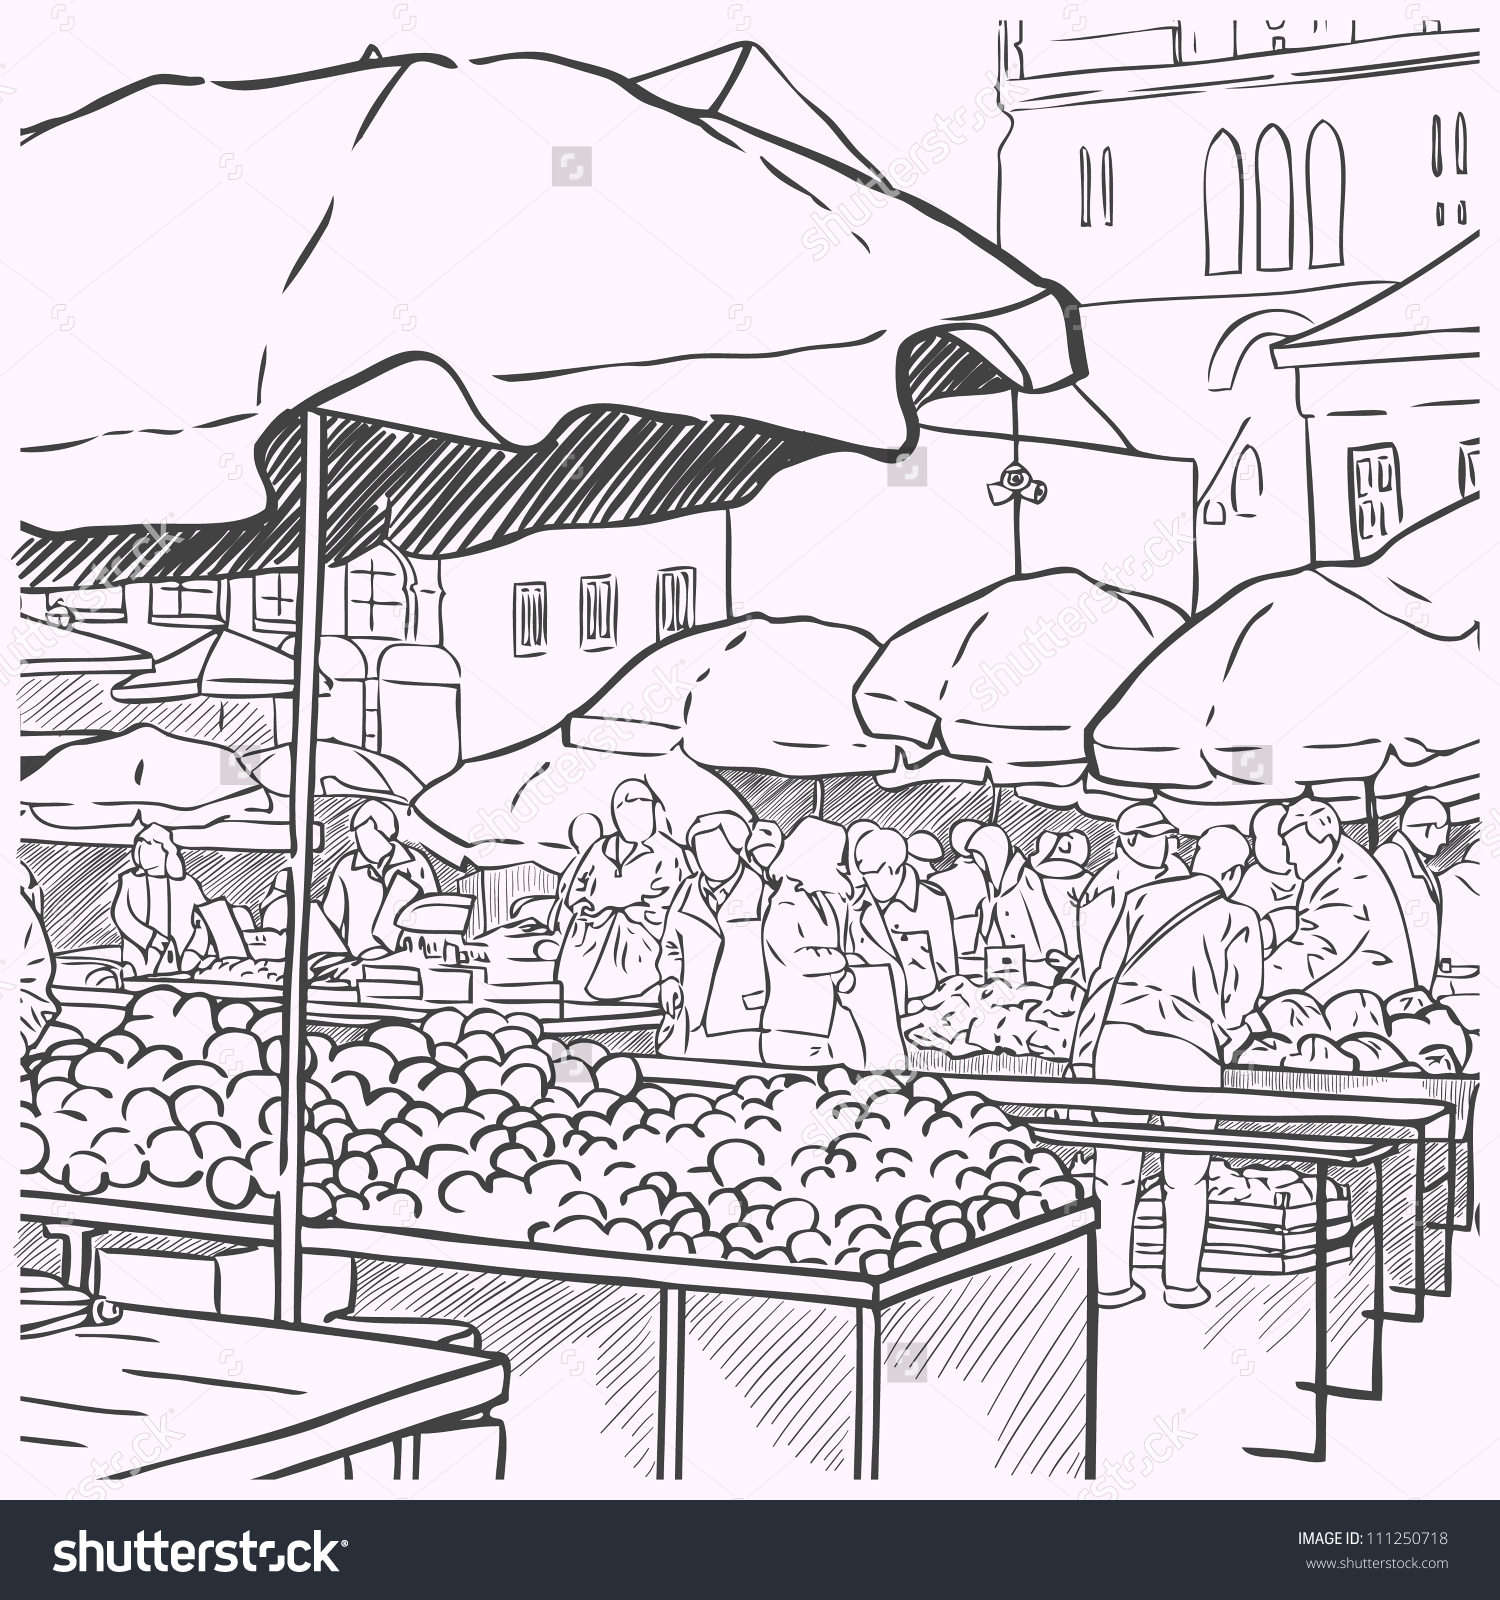 market stalls clip art black and white